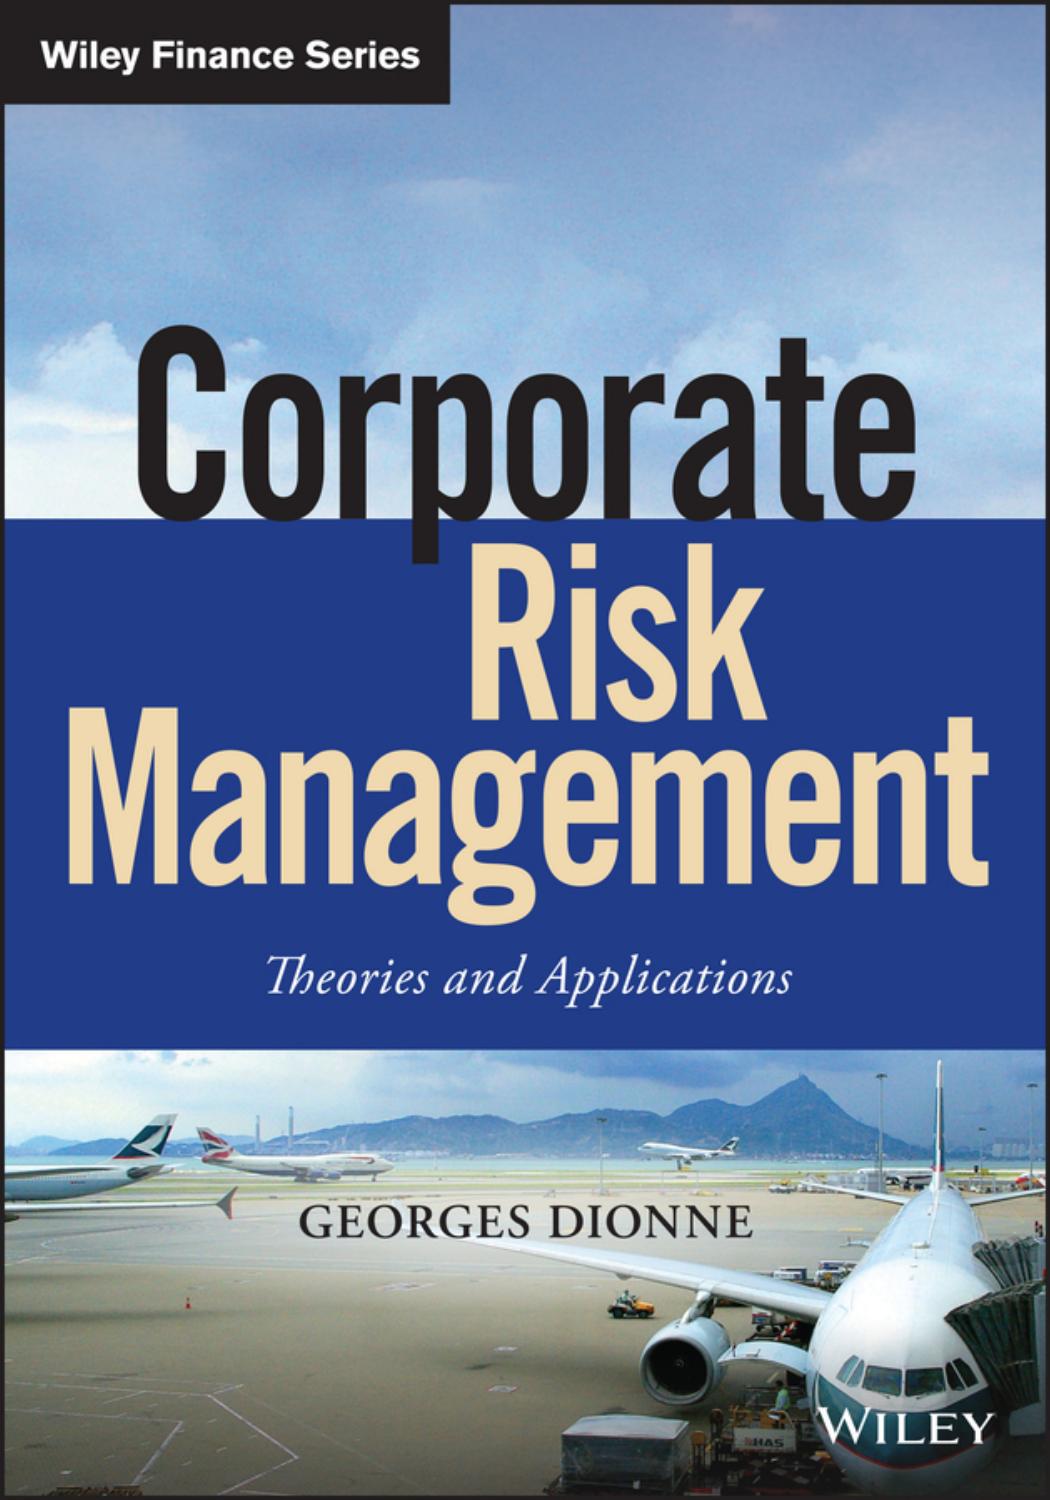 Corporate Risk Management - Georges Dionne.jpg